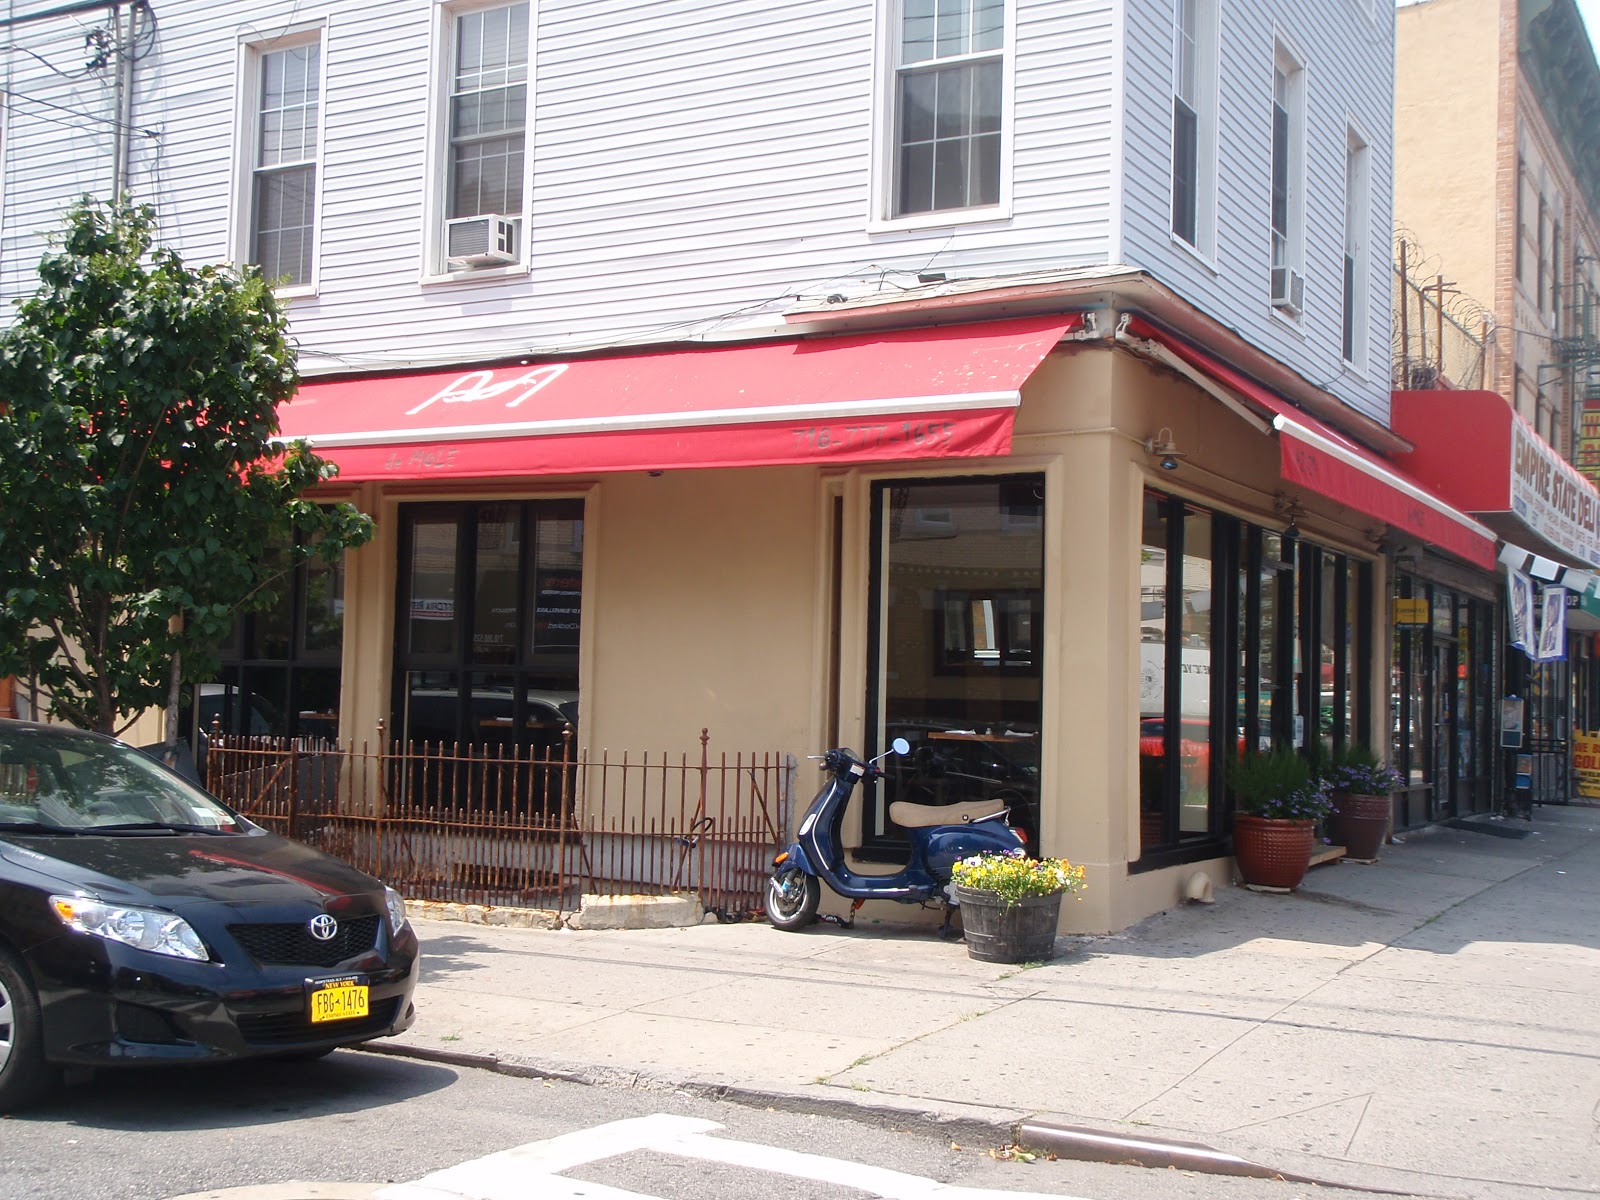 Photo of De Mole Astoria in Queens City, New York, United States - 1 Picture of Restaurant, Food, Point of interest, Establishment